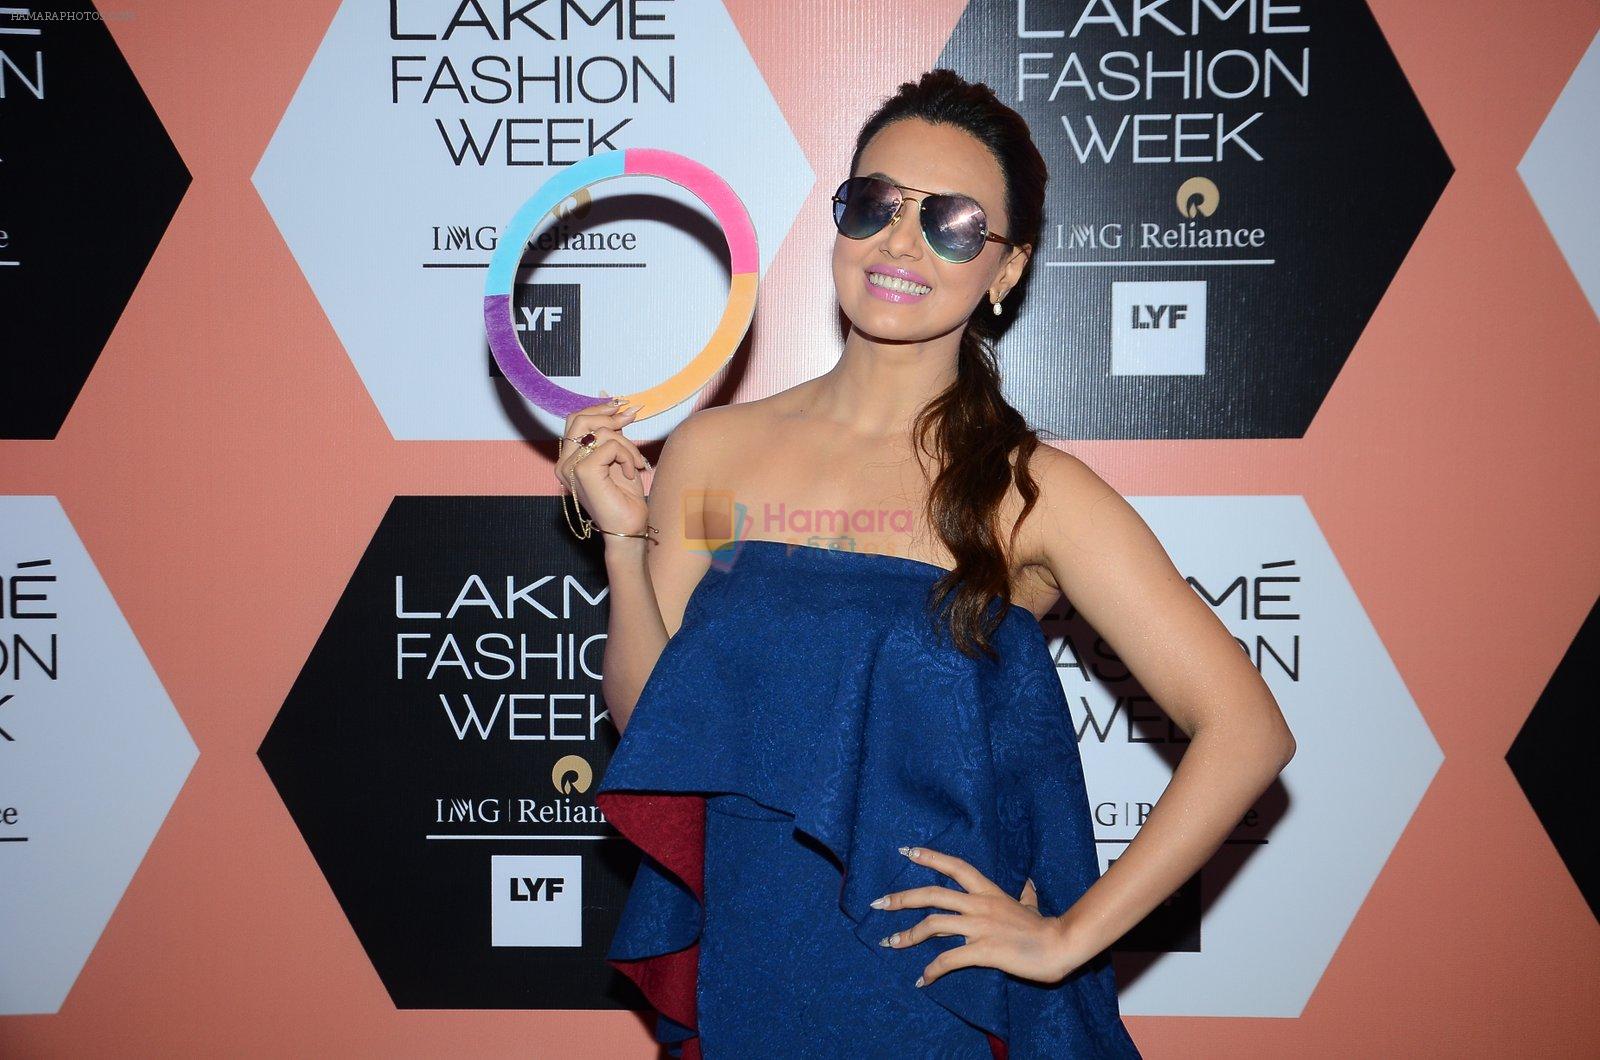 Sana Khan on Day 4 at Lakme Fashion Week 2016 on 2nd April 2016